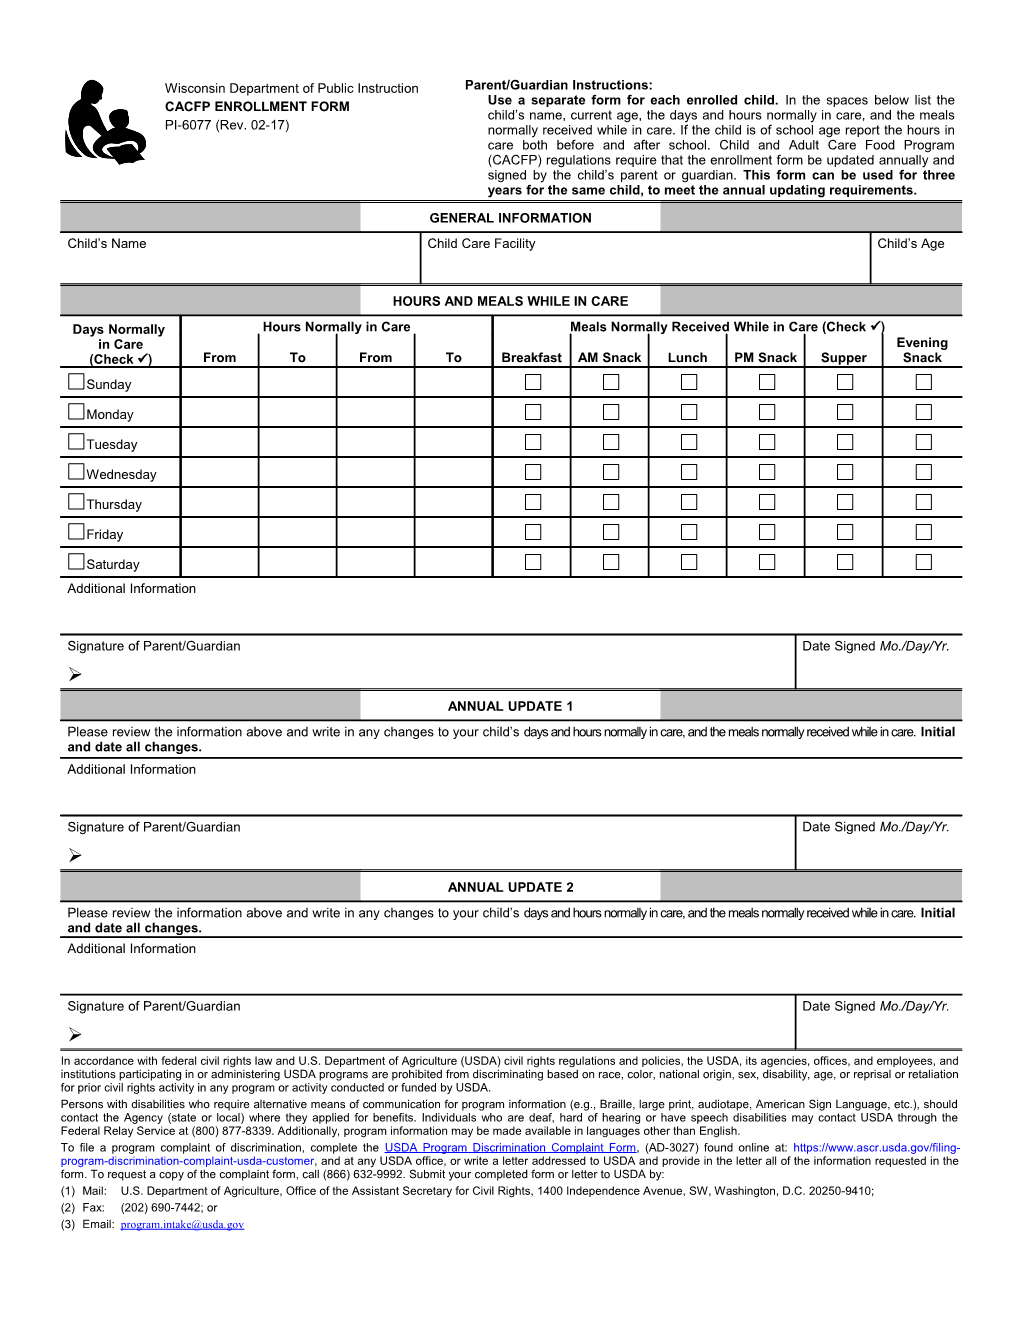 PI-6077 CACFP Enrollment Form